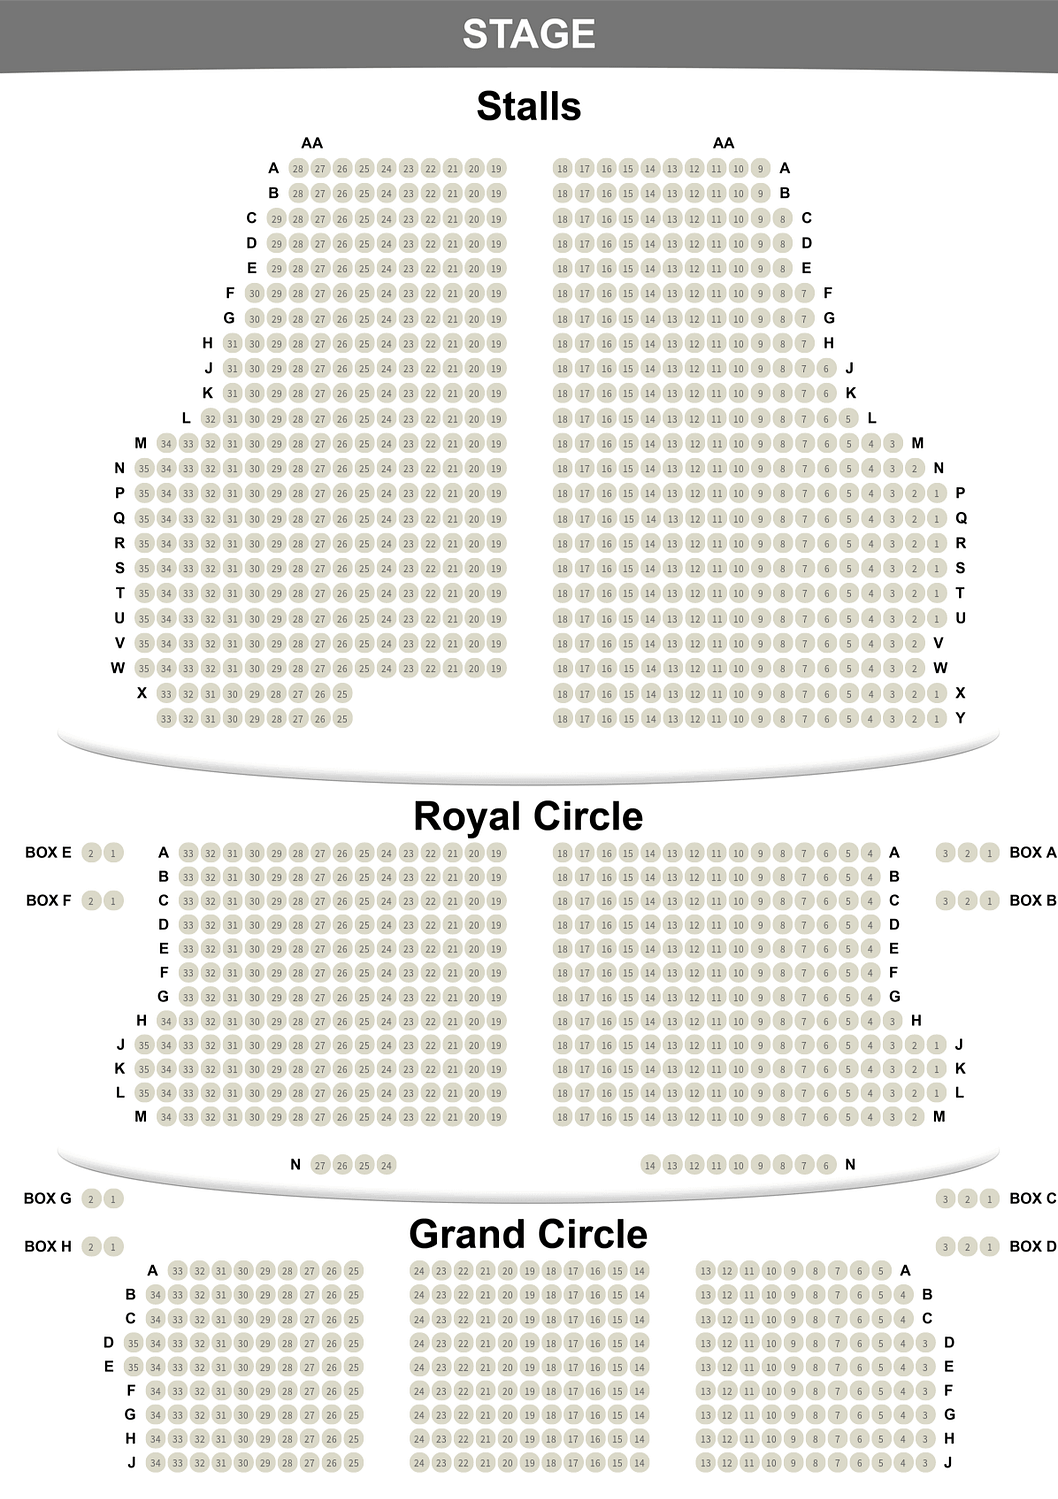 Shaftesbury Theatre London Seating Plan